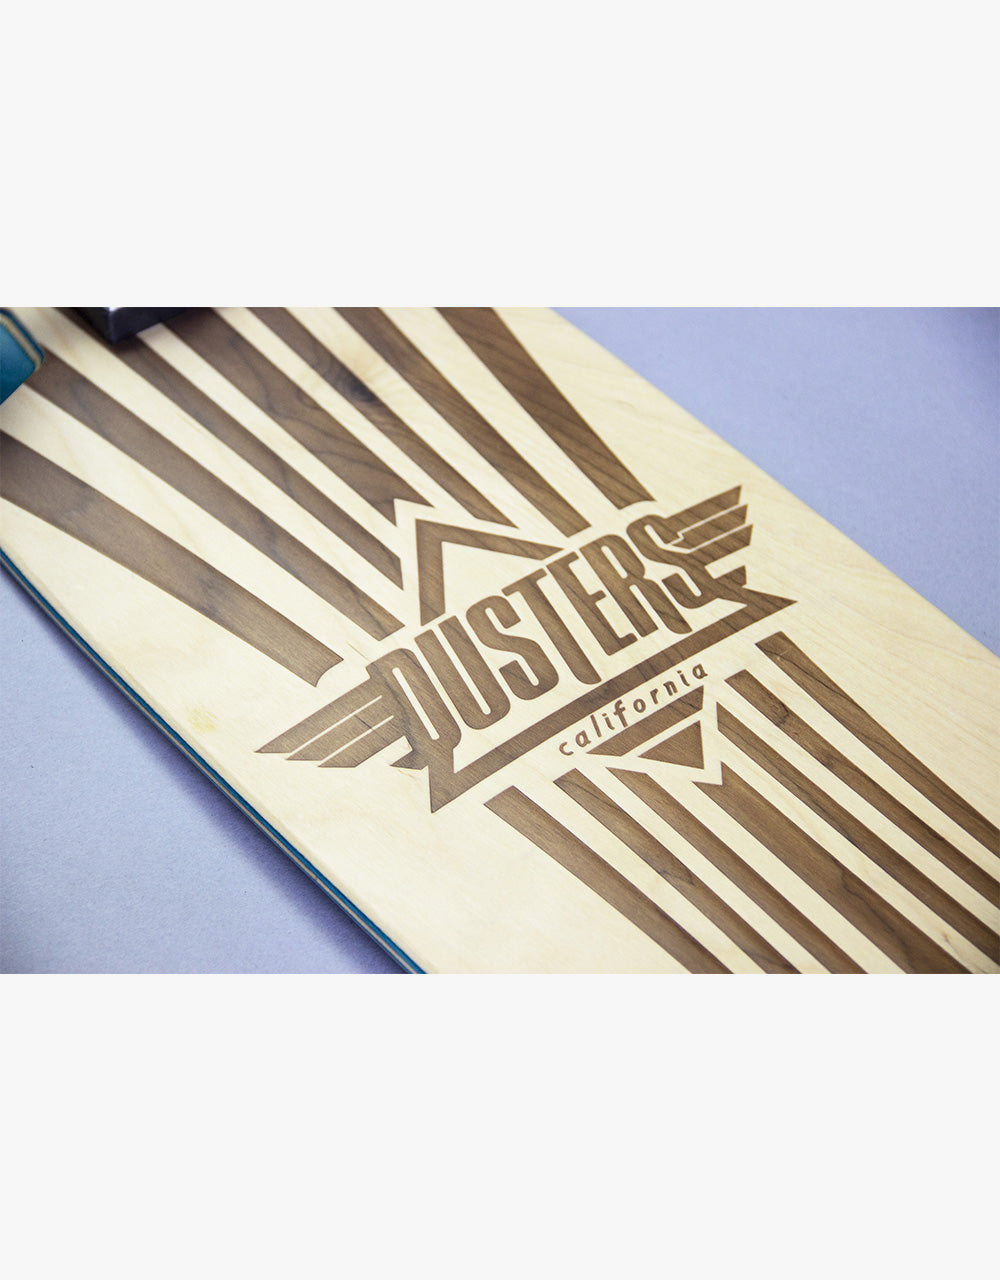 Dusters Cazh Cosmic Cruiser Skateboard - 8.75" x 29.5"